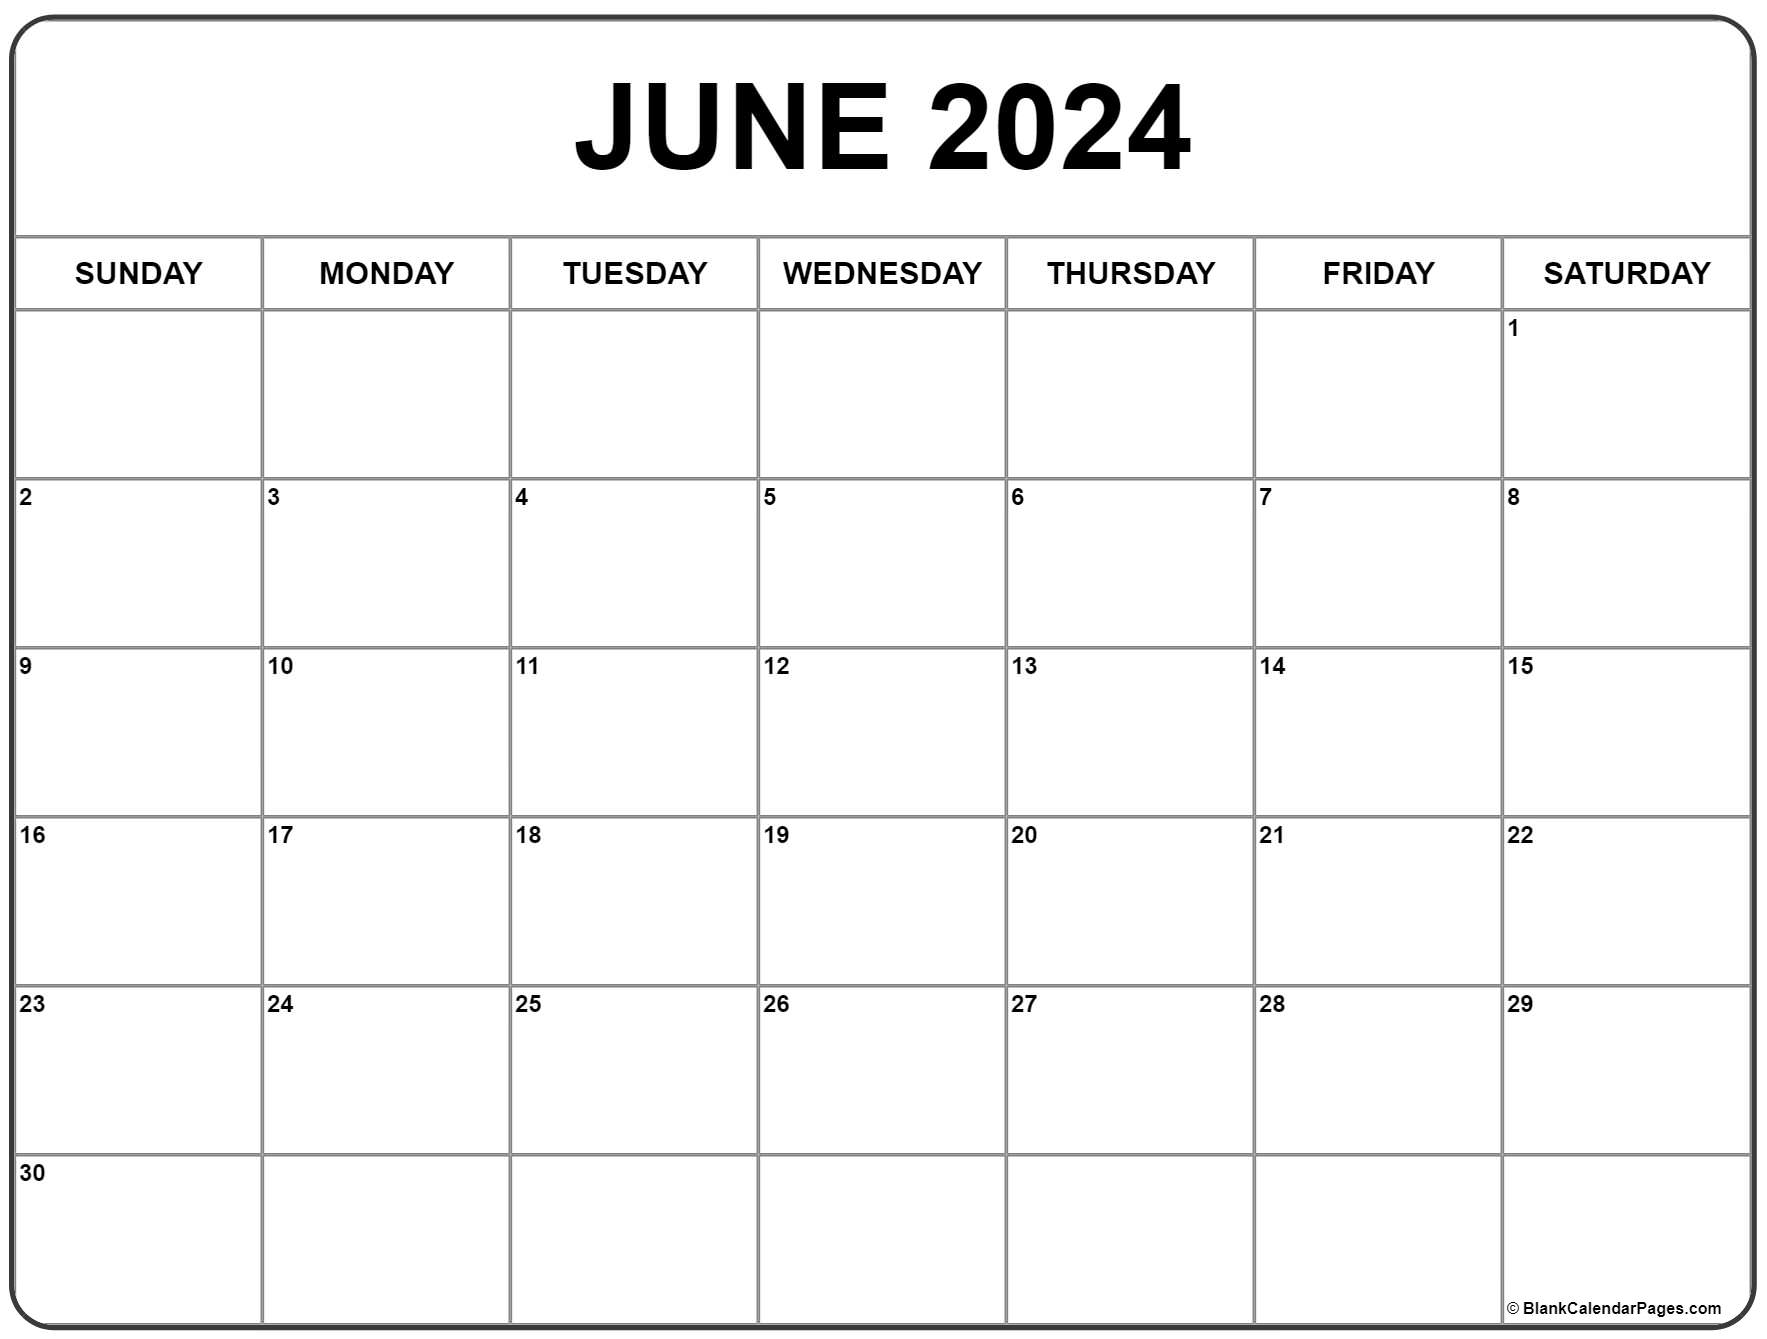 June 2024 Calendar | Free Printable Calendar for Free June Calendar Printable 2024